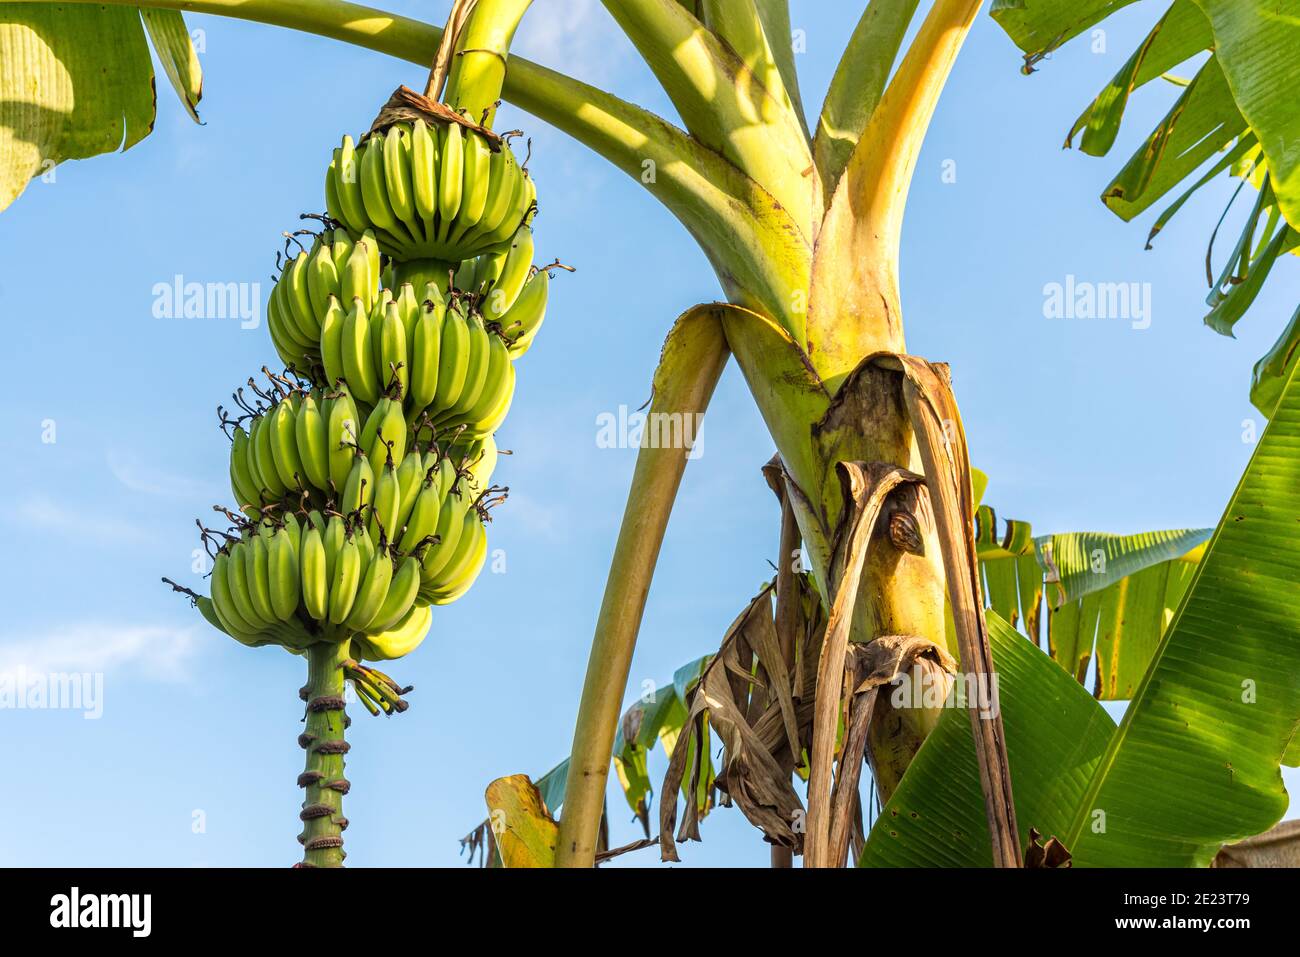 https://c8.alamy.com/comp/2E23T79/bunch-of-unripe-bananas-on-tree-against-blue-sky-tropical-garden-in-vietnam-2E23T79.jpg